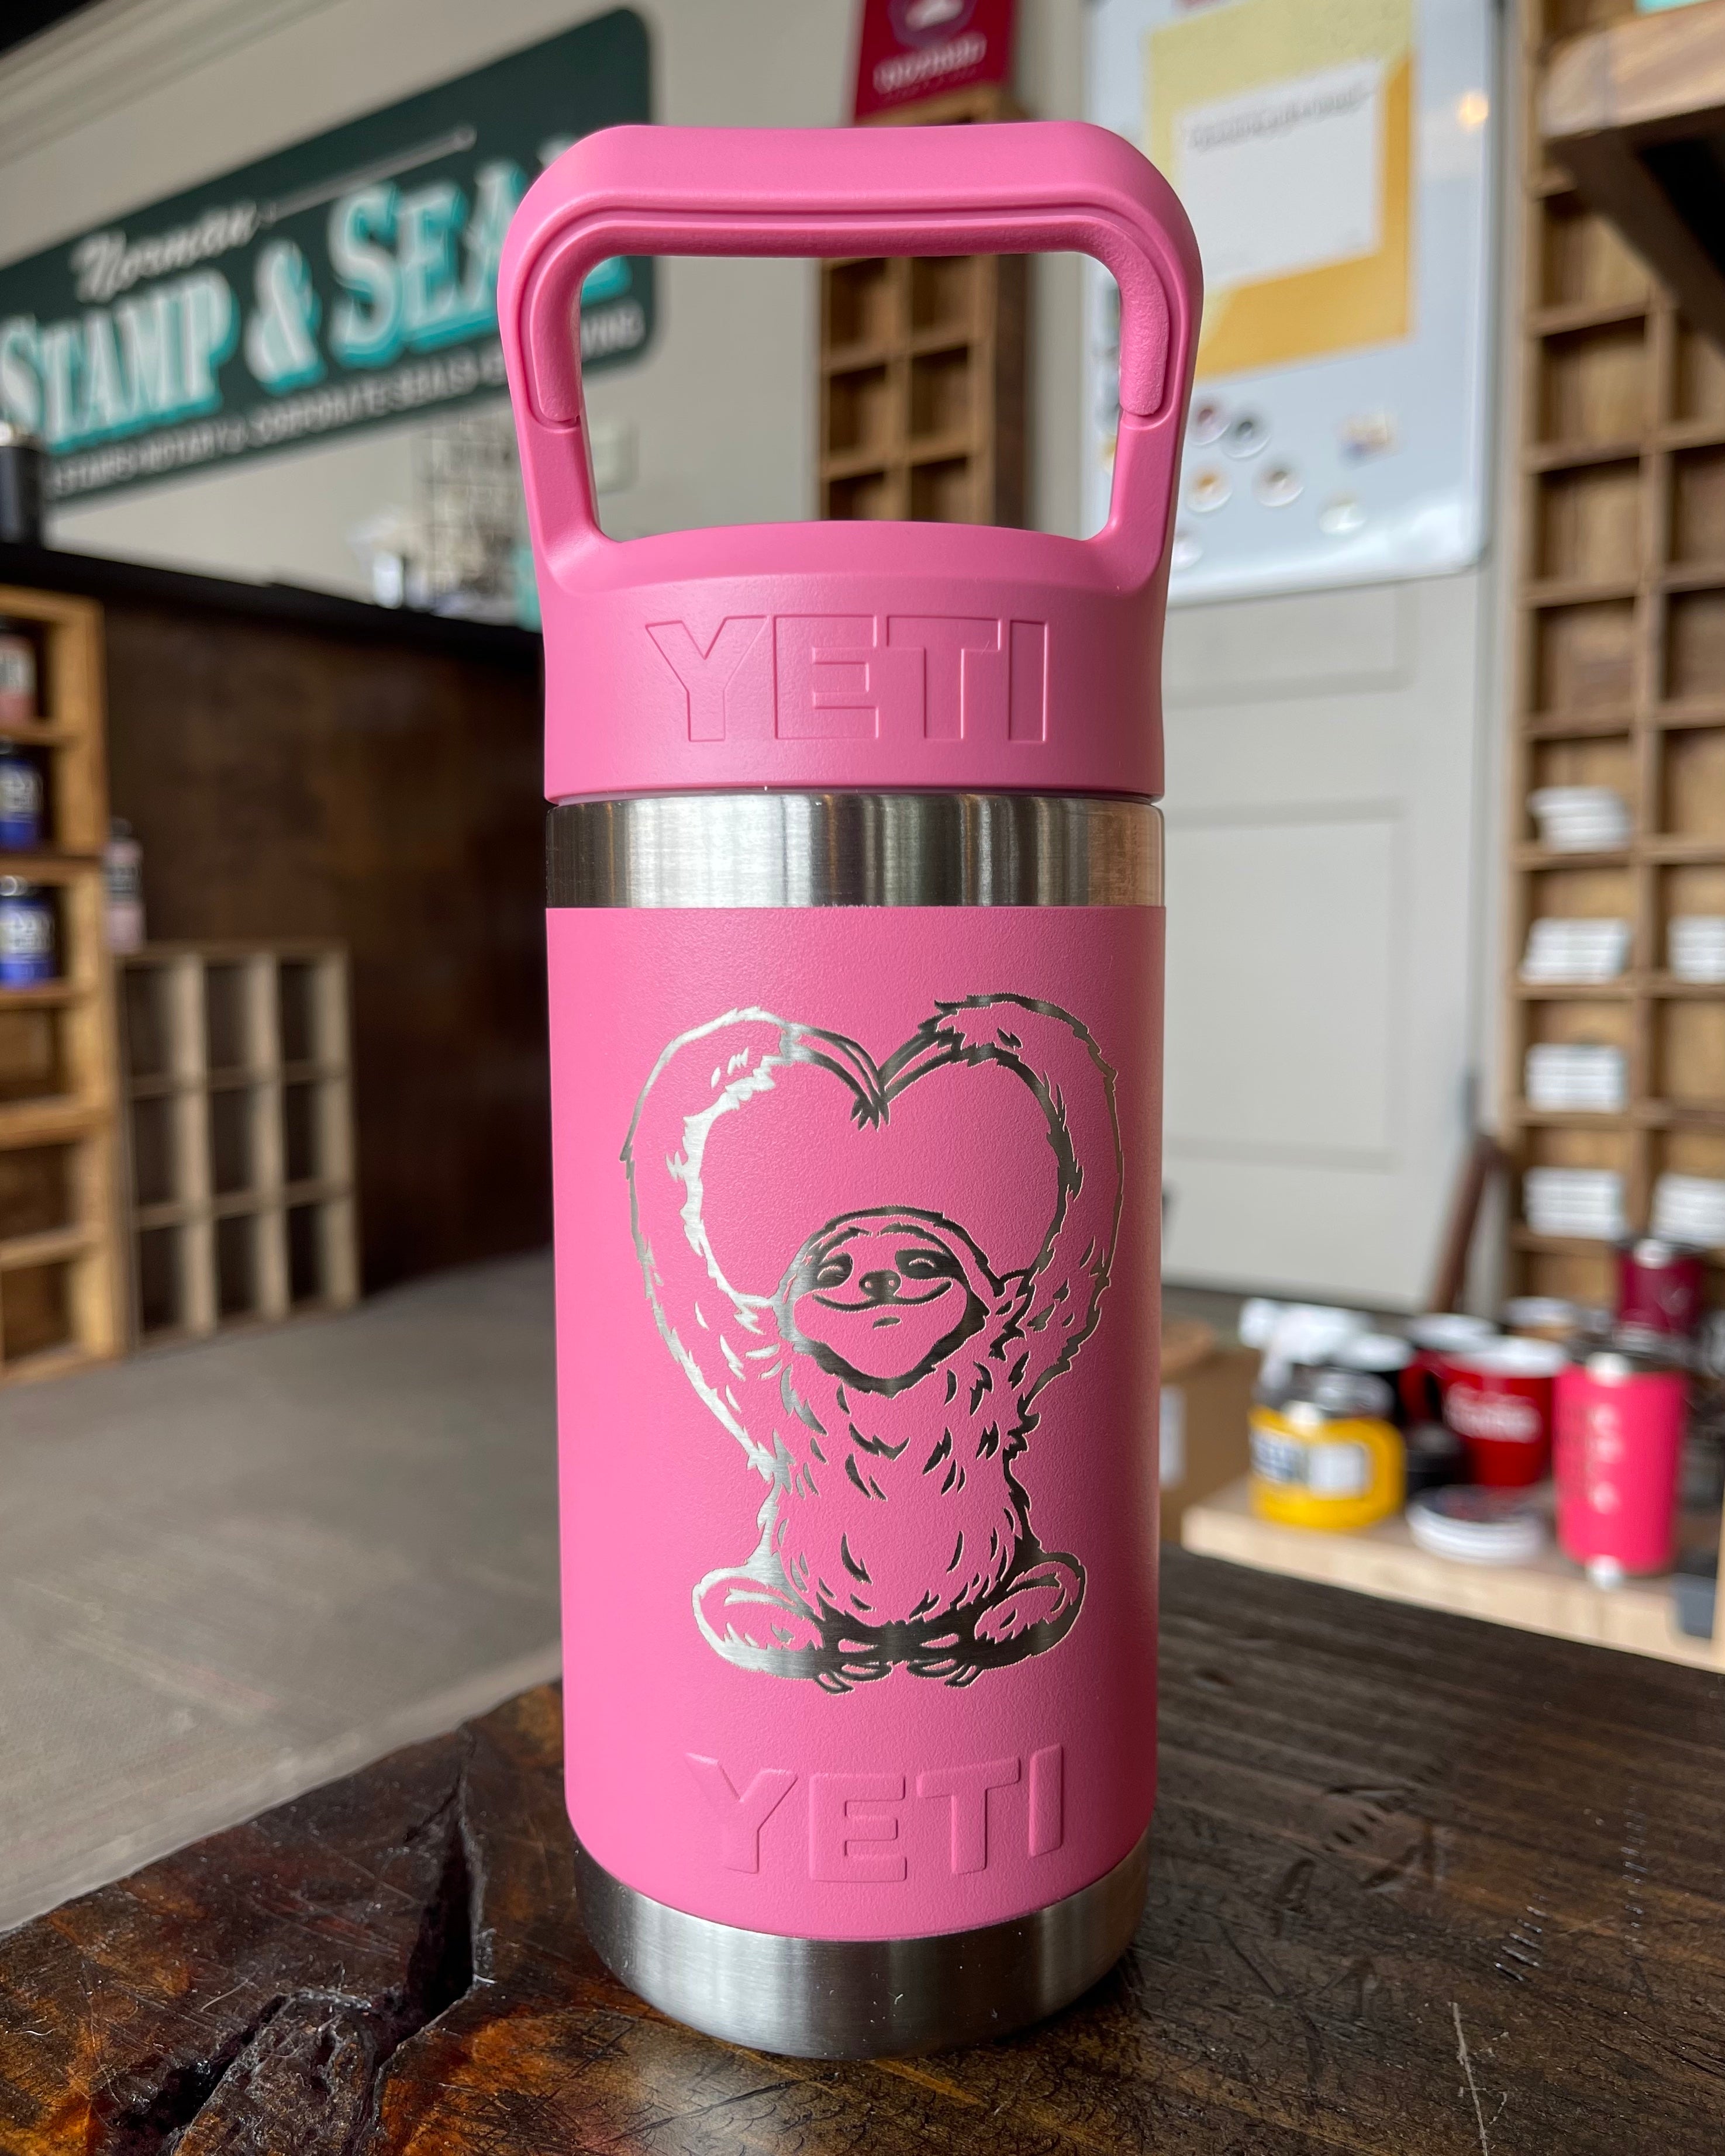 Big Sister Personalized Engraved 12oz YETI Kids Water Bottle – Sunny Box